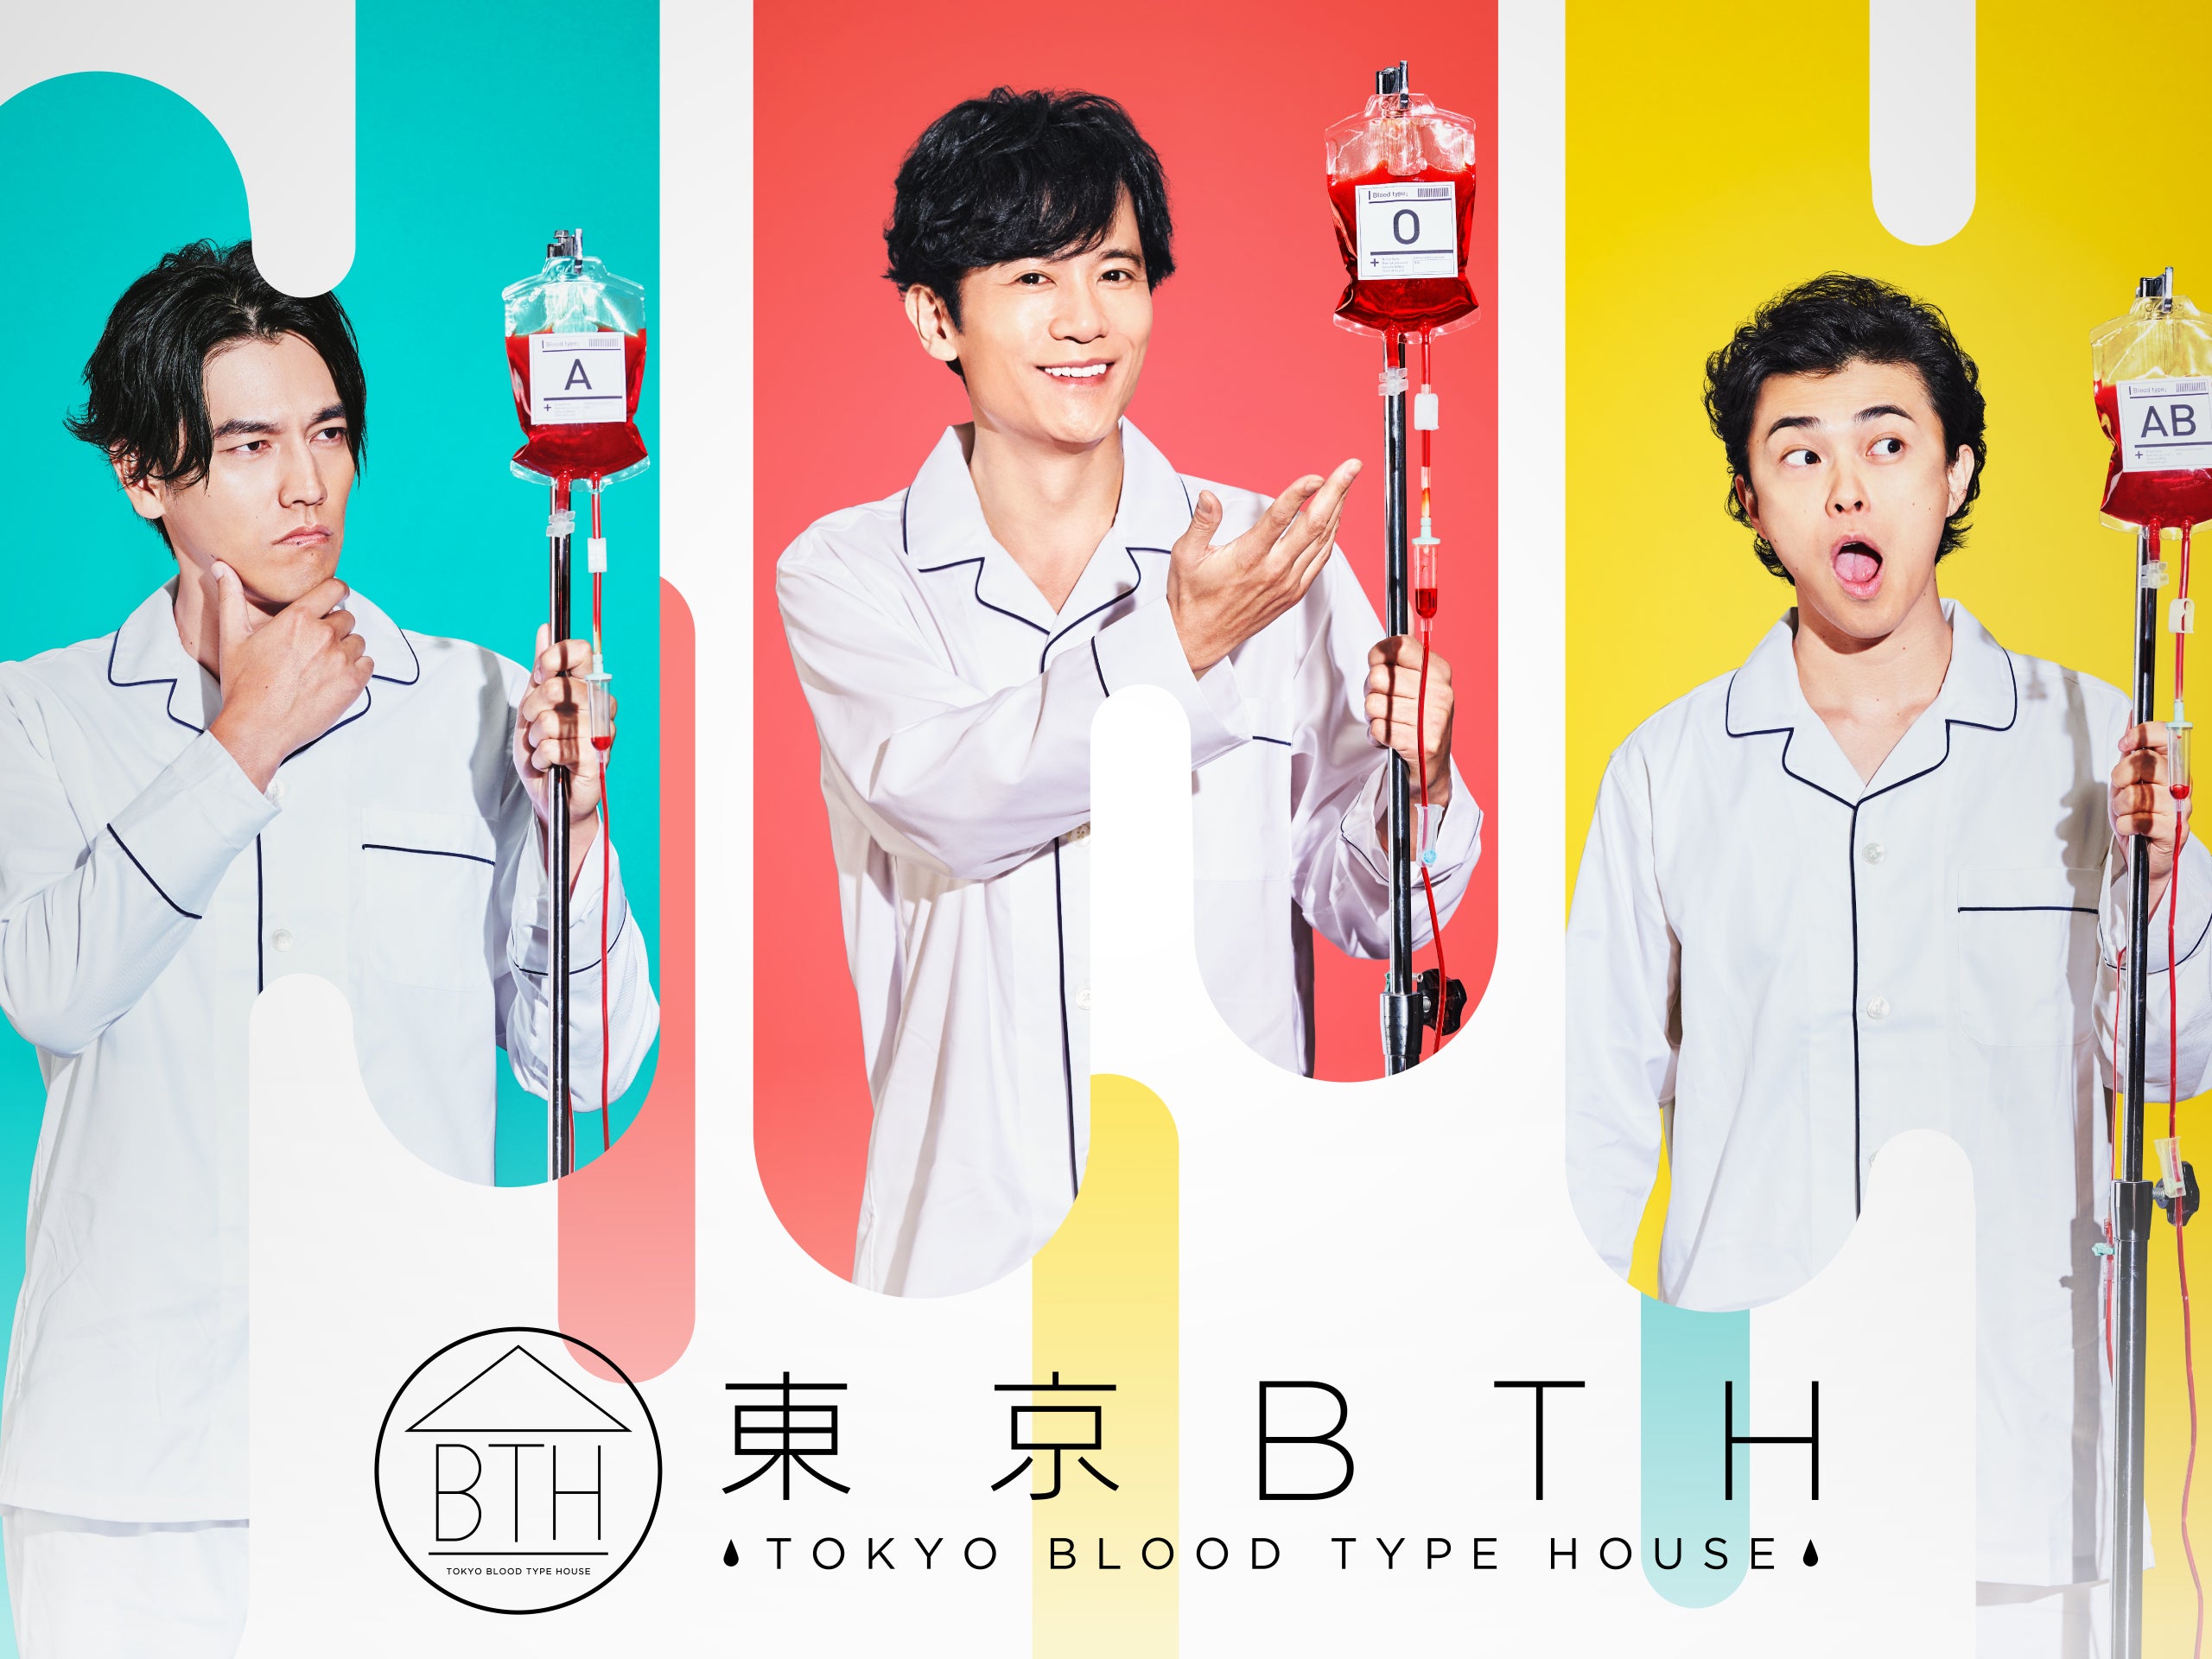 TV ratings for Tokyo Bth: Tokyo Blood Type House (東京BTH〜TOKYO BLOOD TYPE HOUSE〜) in Polonia. Amazon Prime Video TV series